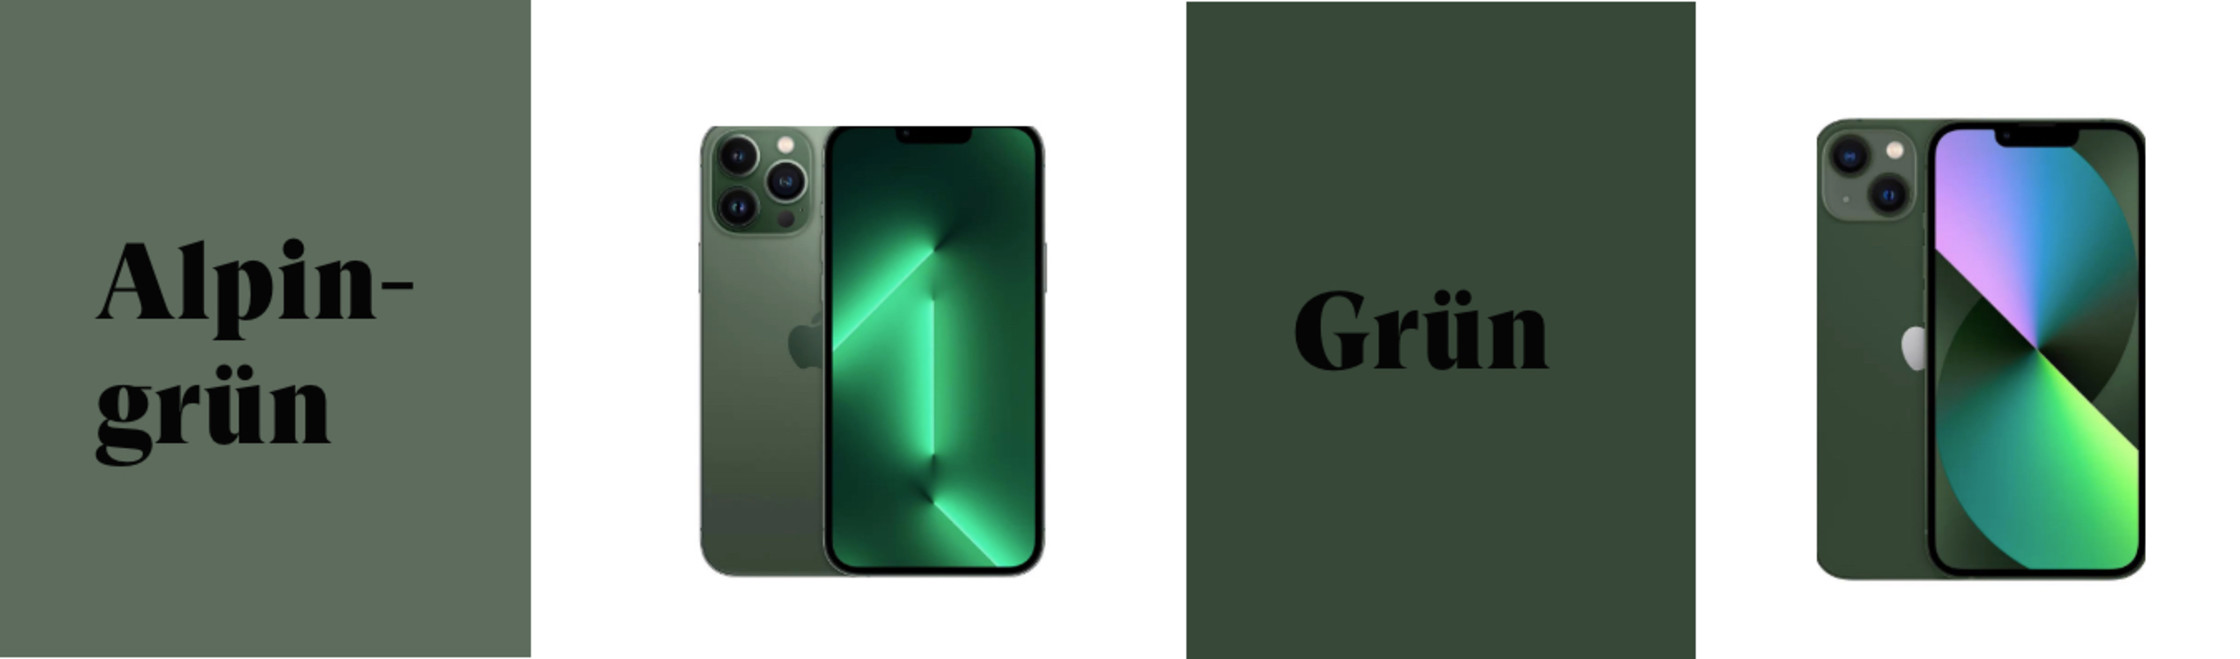 iphone 13 farben grün